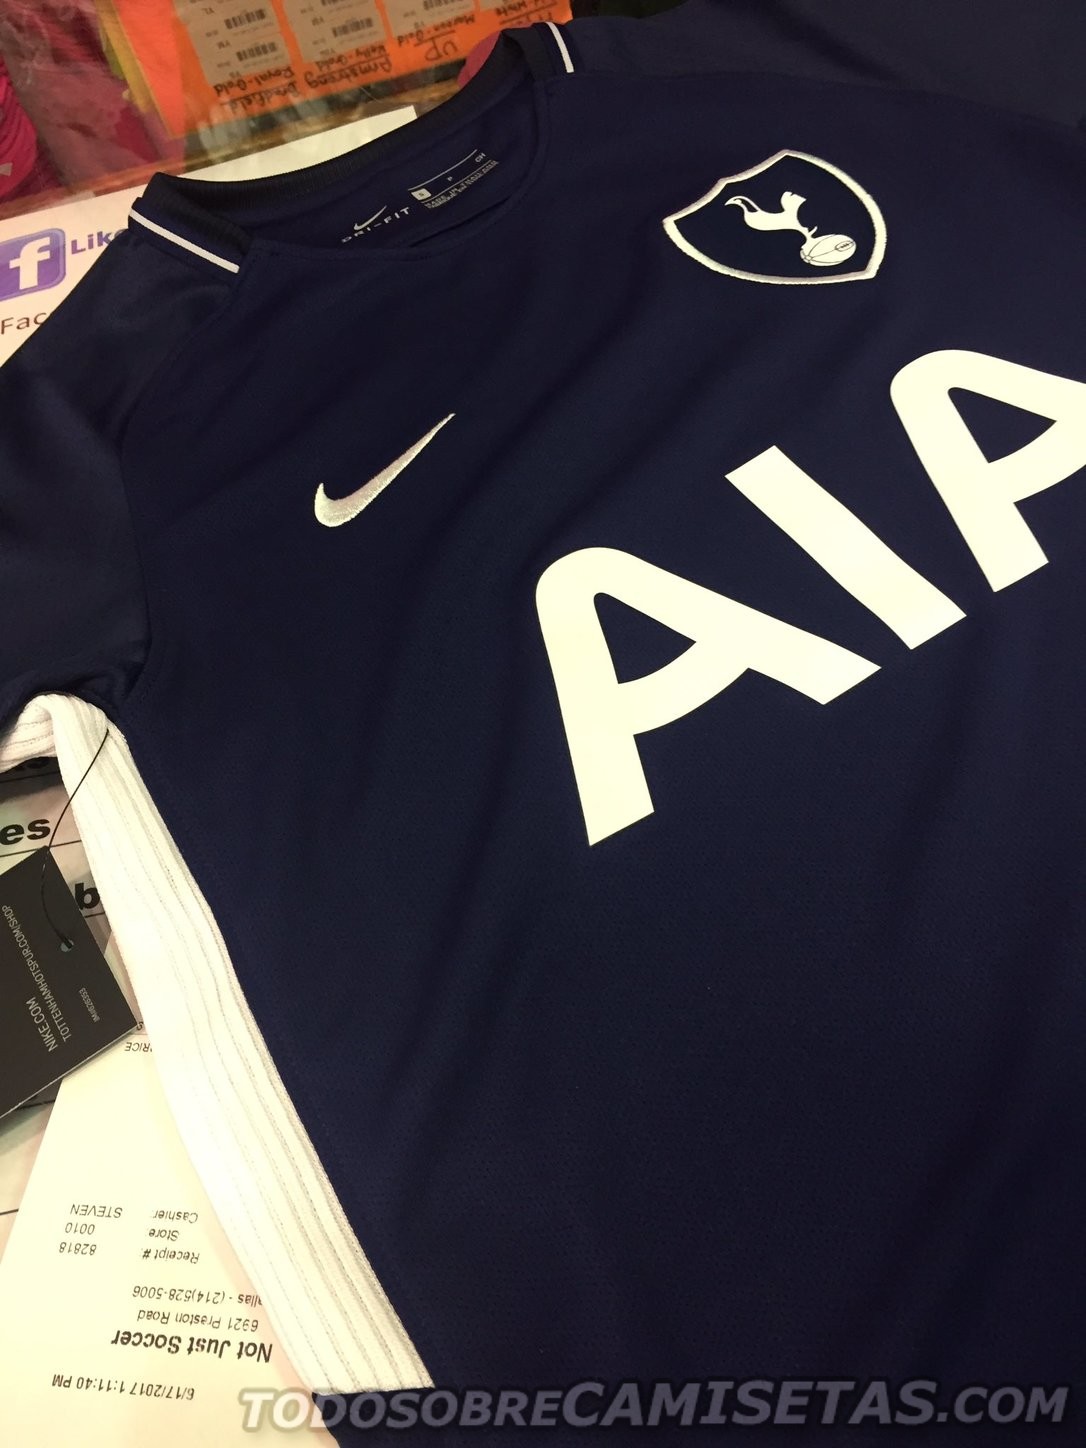 Tottenham Hotspur Nike kits 2017-18 LEAKED